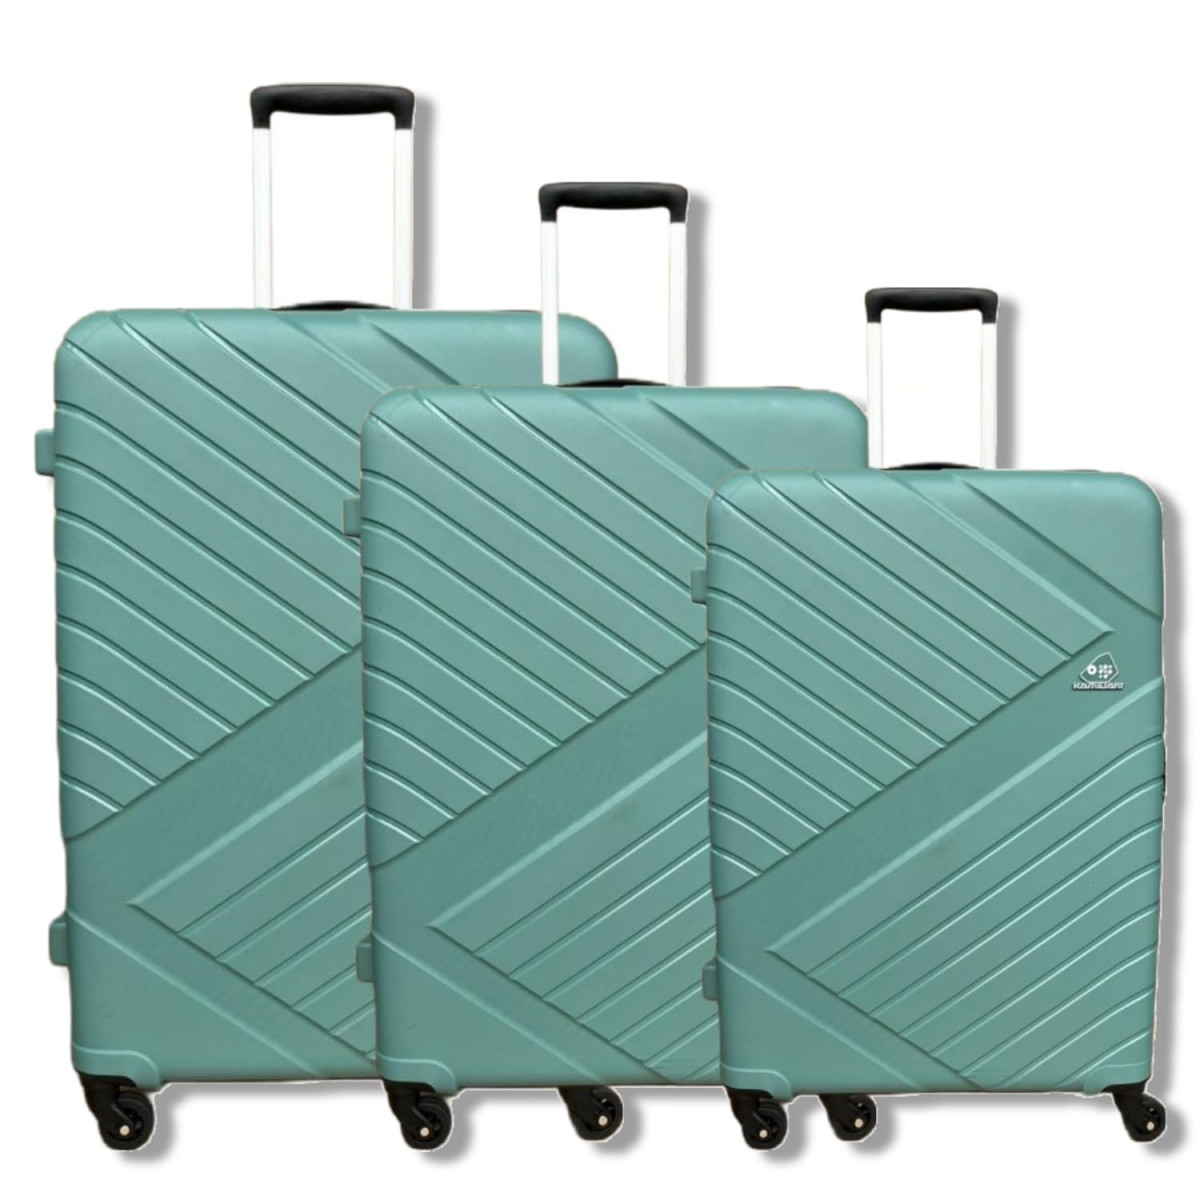 American Tourister Kamiliant Polypropylene Wayfarer Set of 3 Luggage Trolley Bags Suitcase Small Medium Large Green